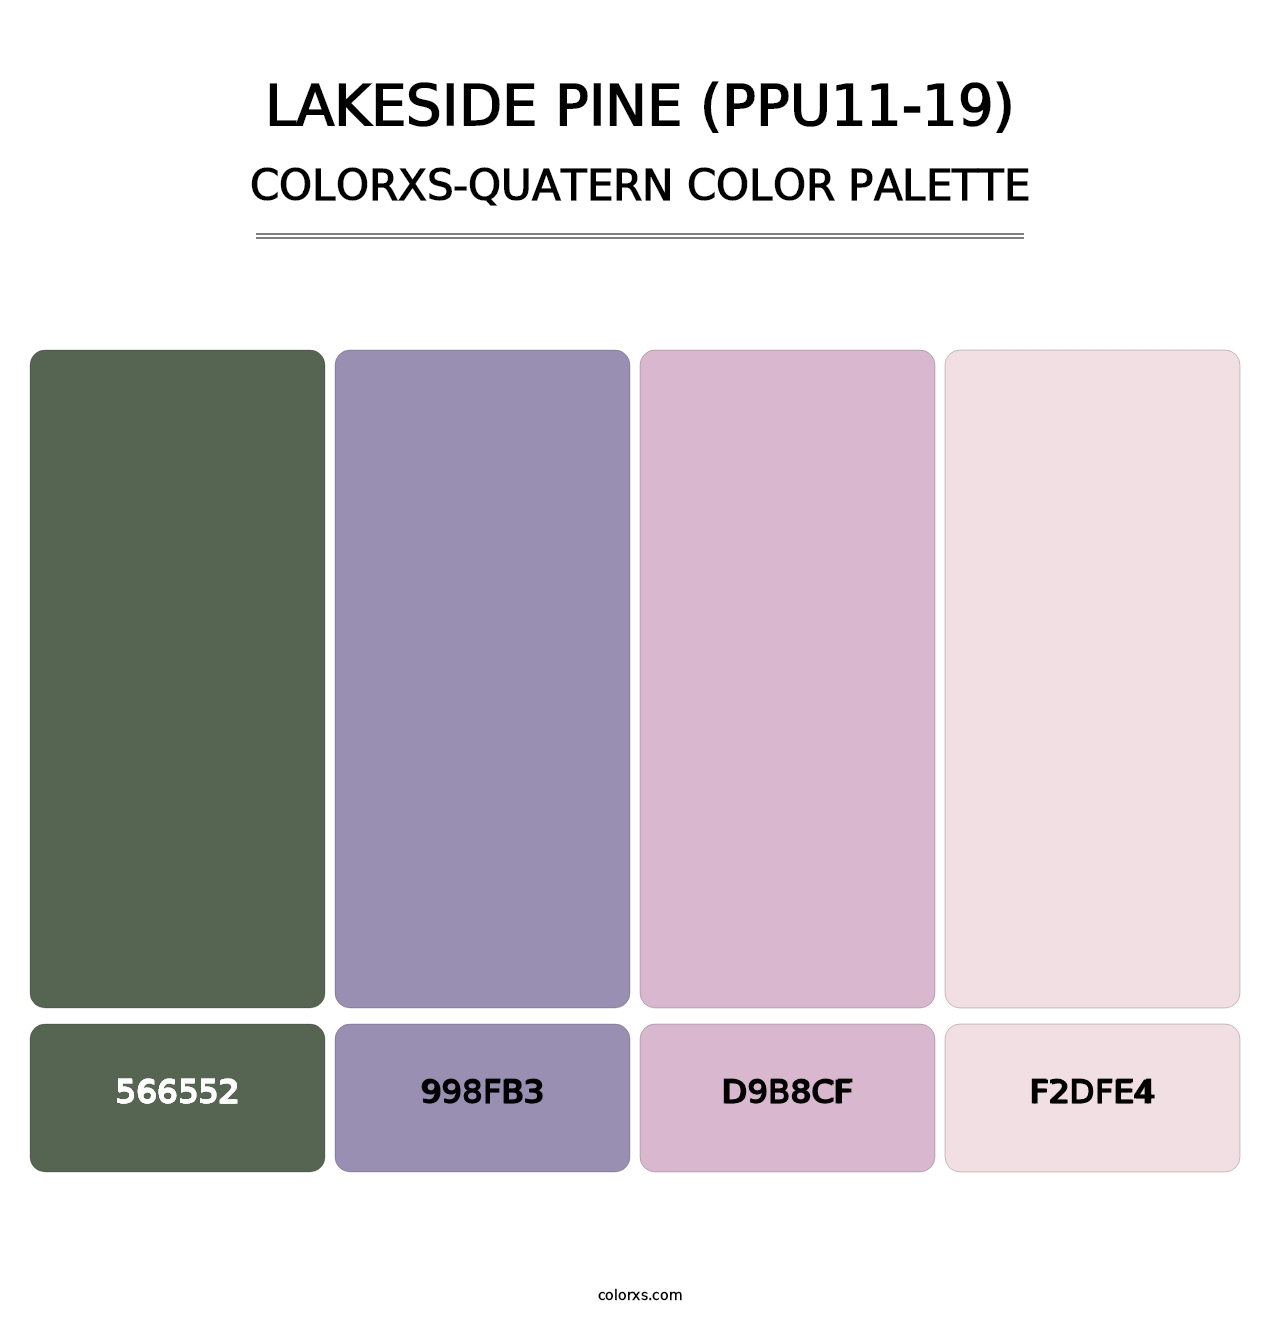 Lakeside Pine (PPU11-19) - Colorxs Quatern Palette